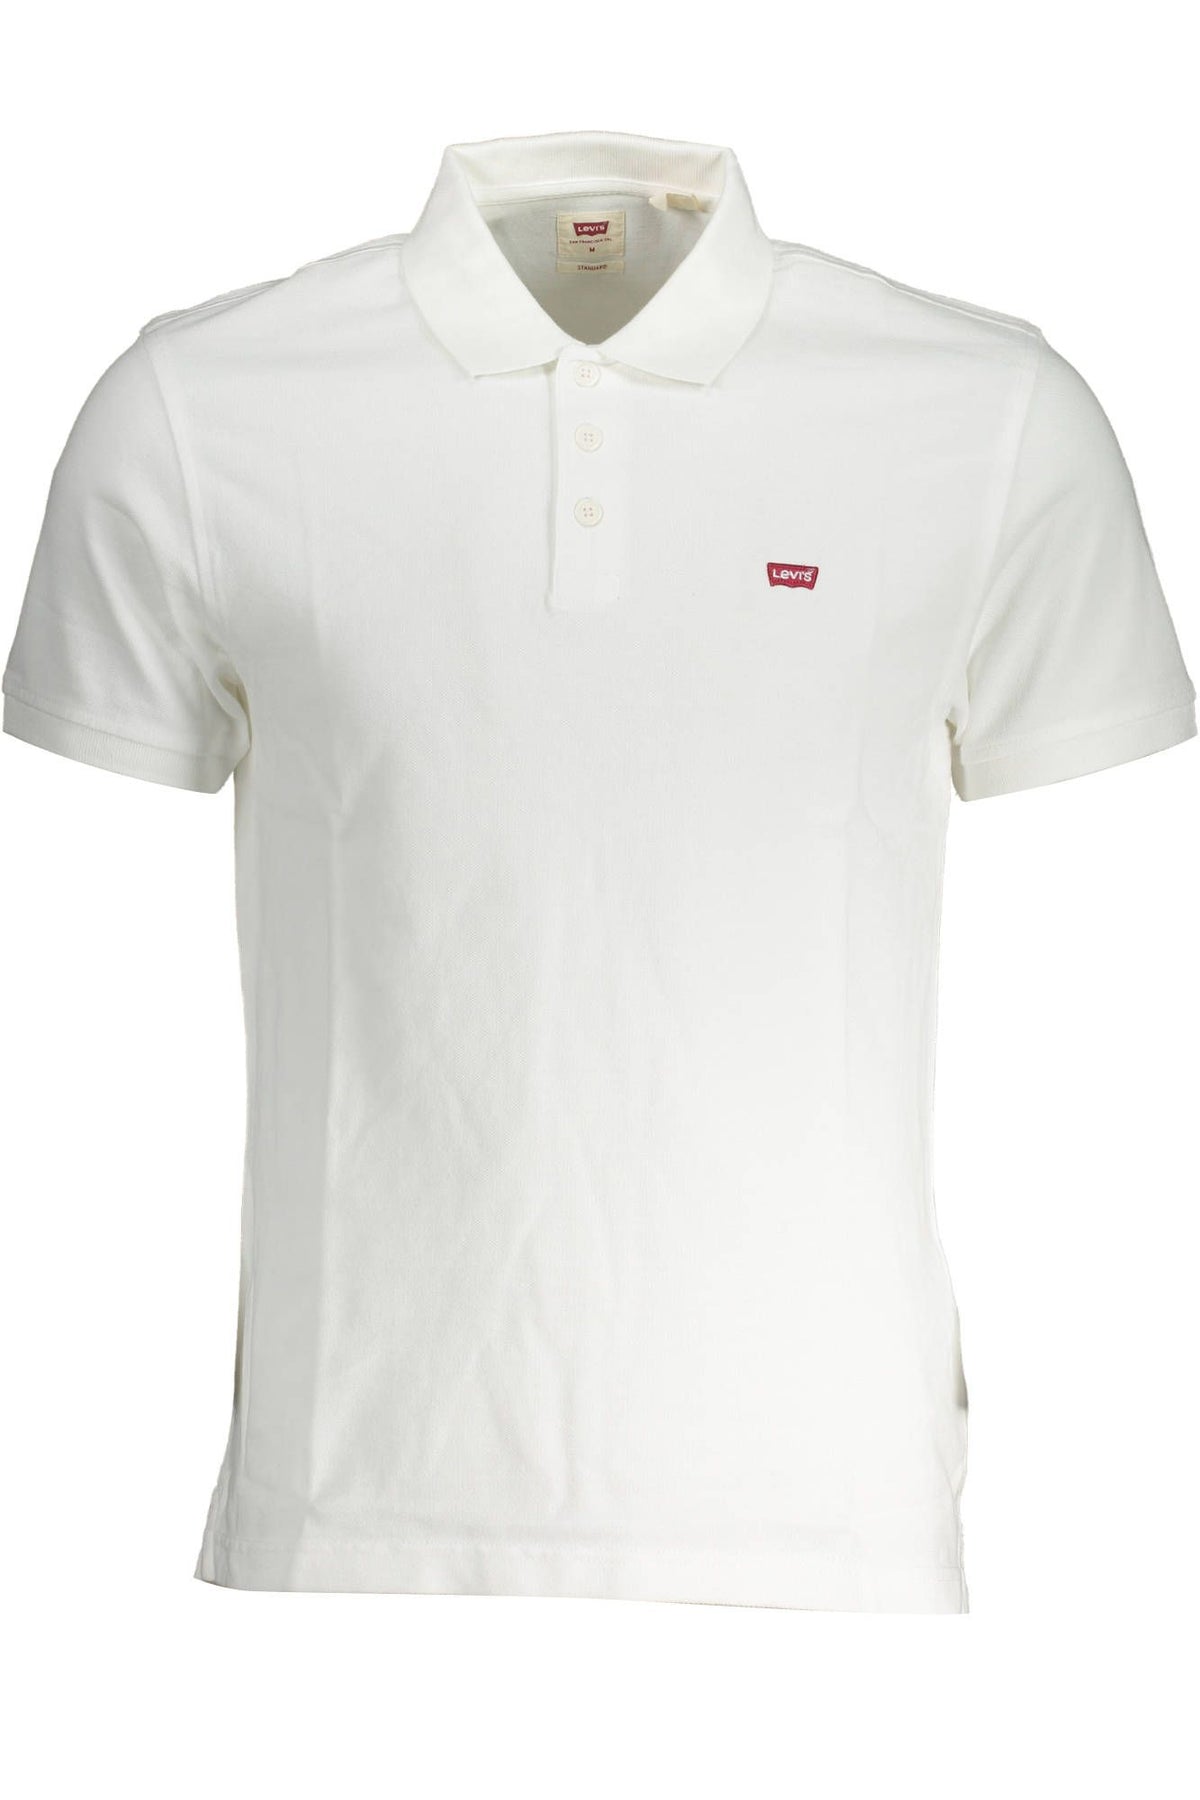 Levi's Classic White Cotton Polo Shirt